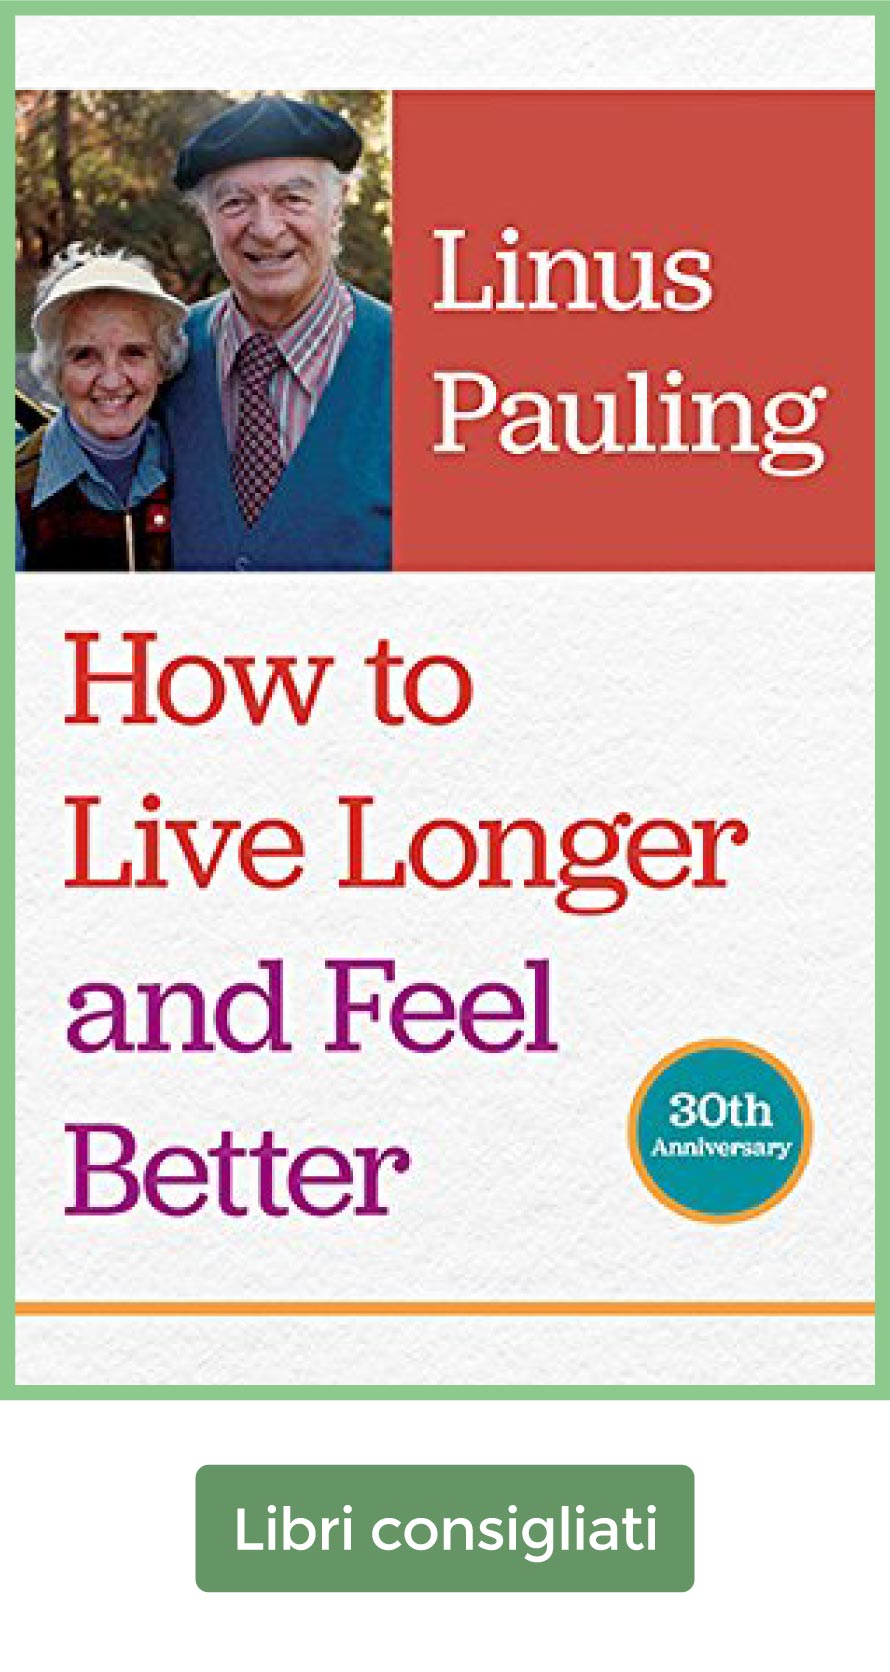 How to live longer and feel better, un libro da leggere per approfondire